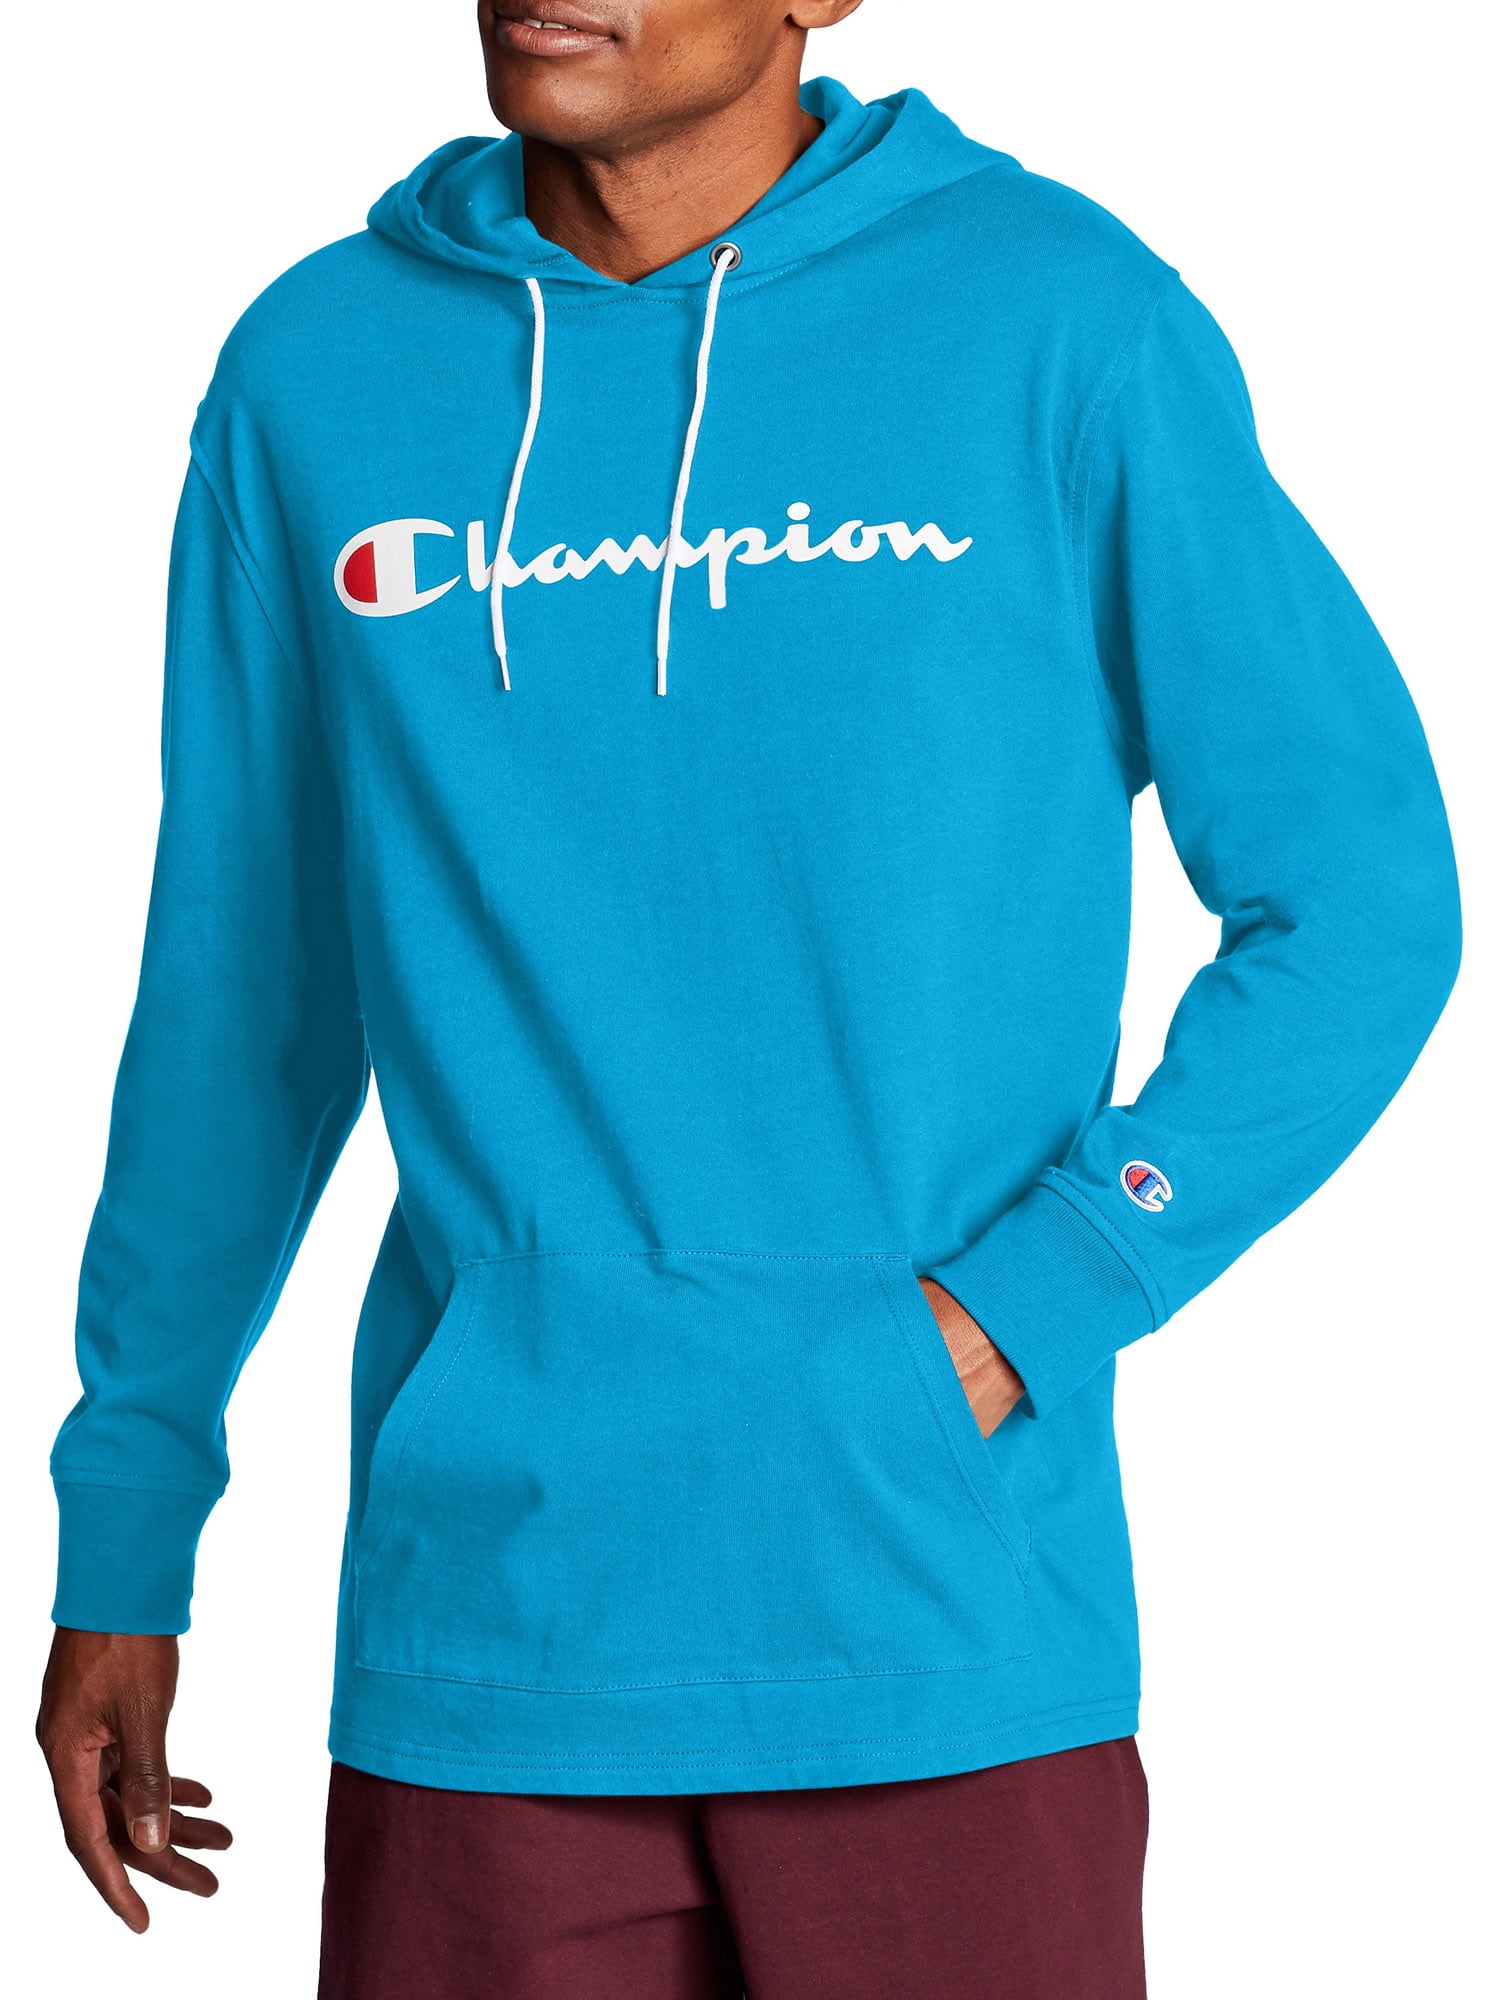 coolest champion hoodies